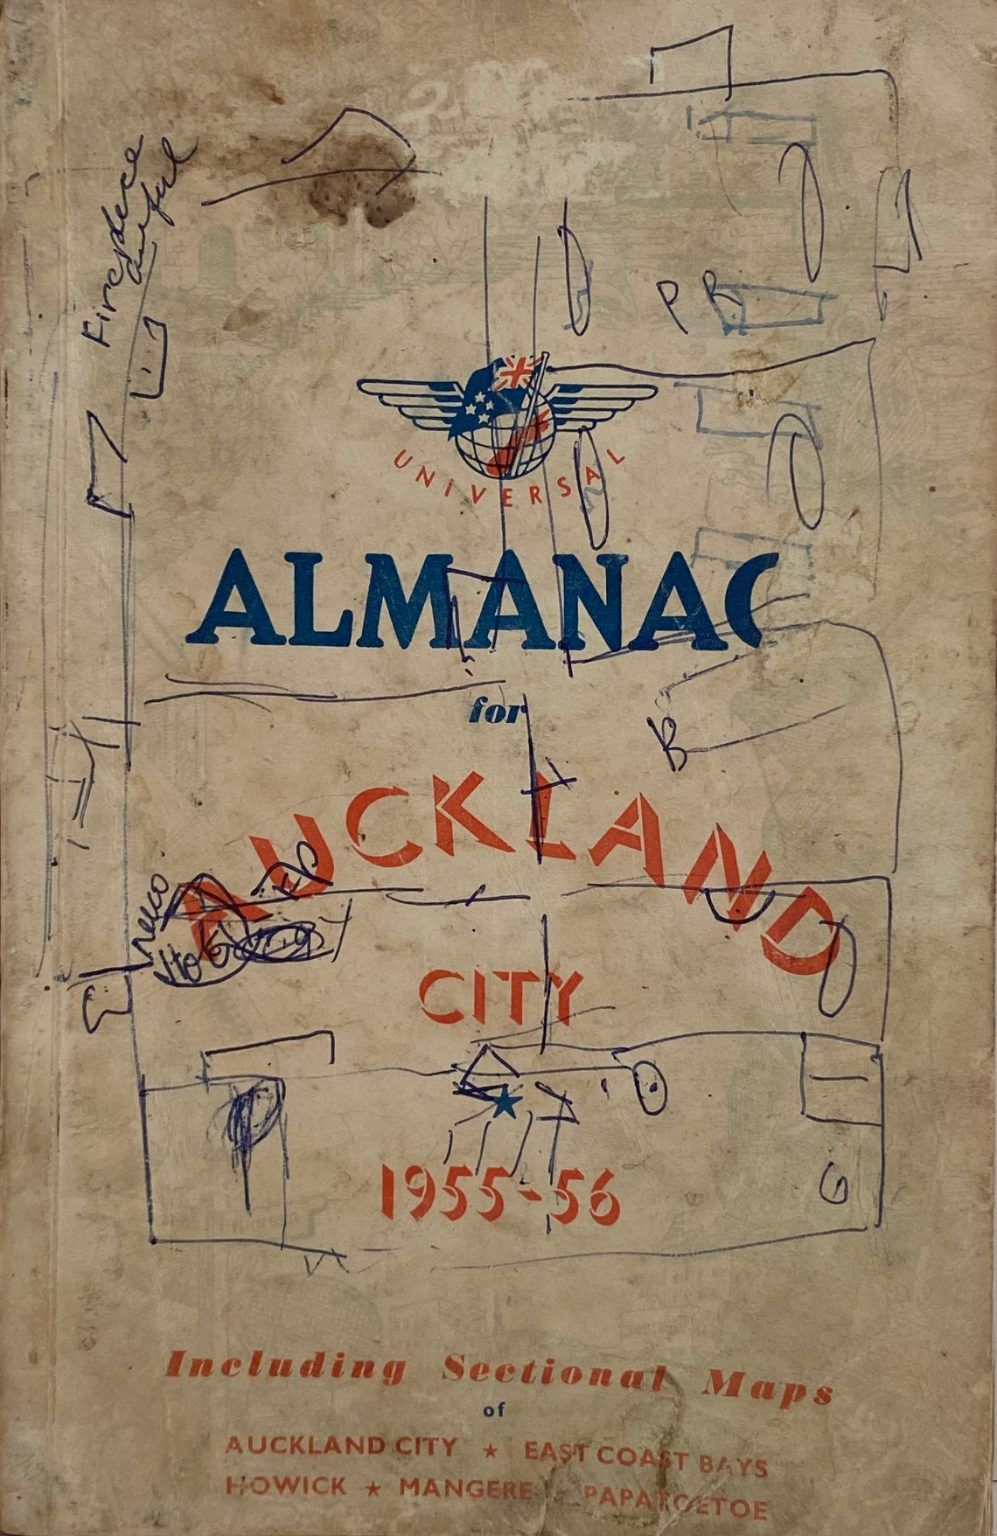 UNIVERSAL ALMANAC: For Auckland City 1955-56